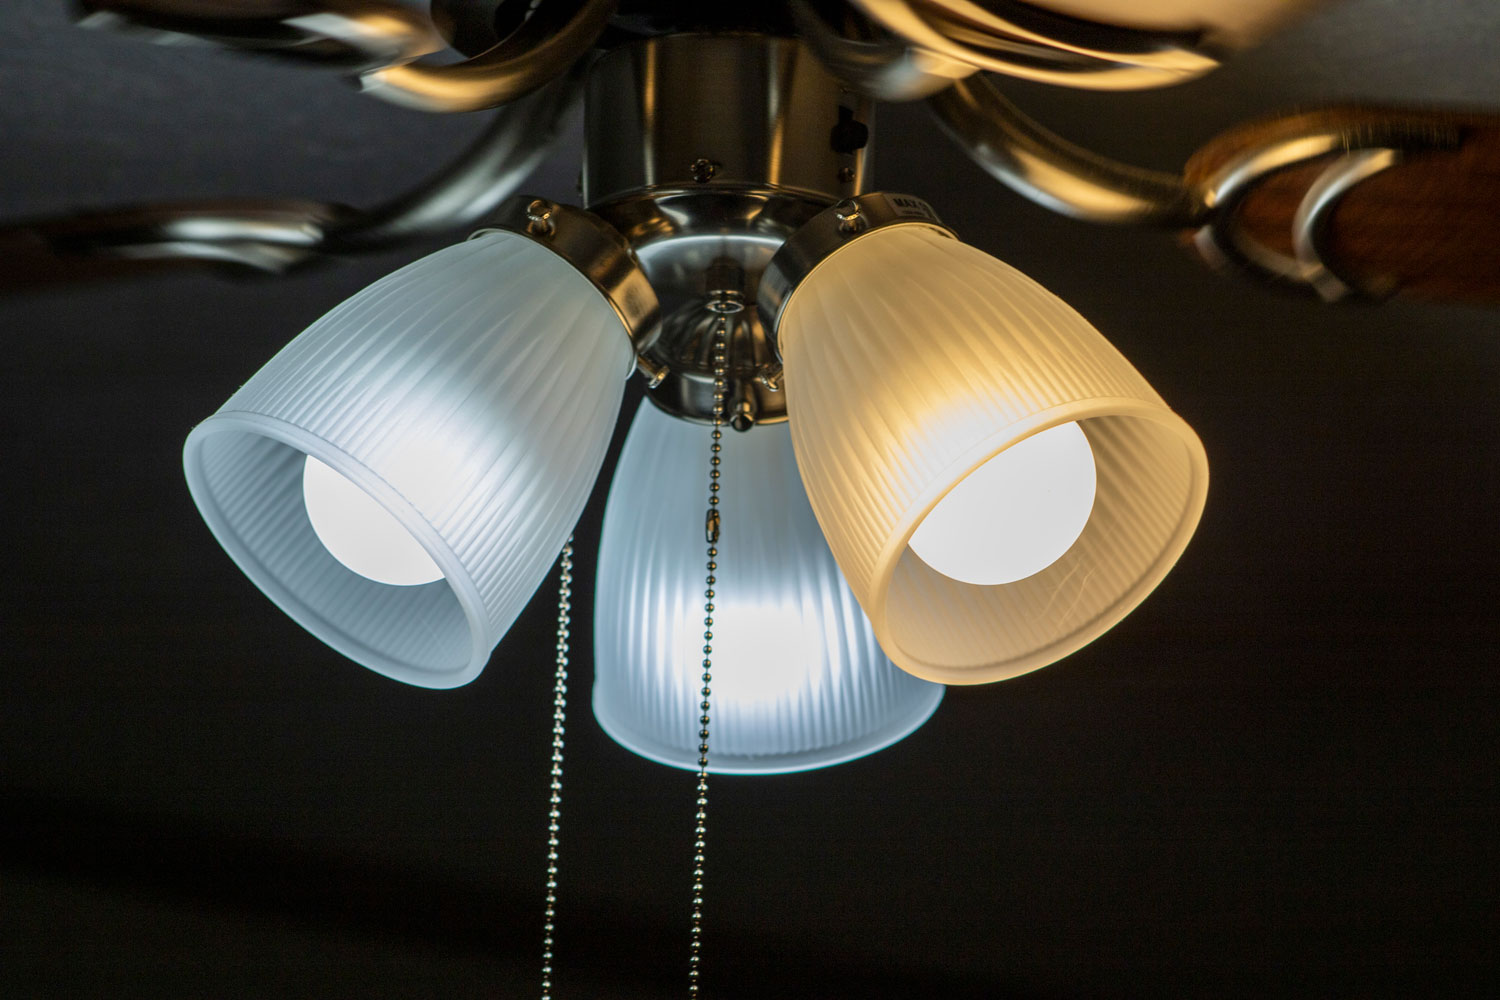 Led light bulbs installed on the ceiling fan